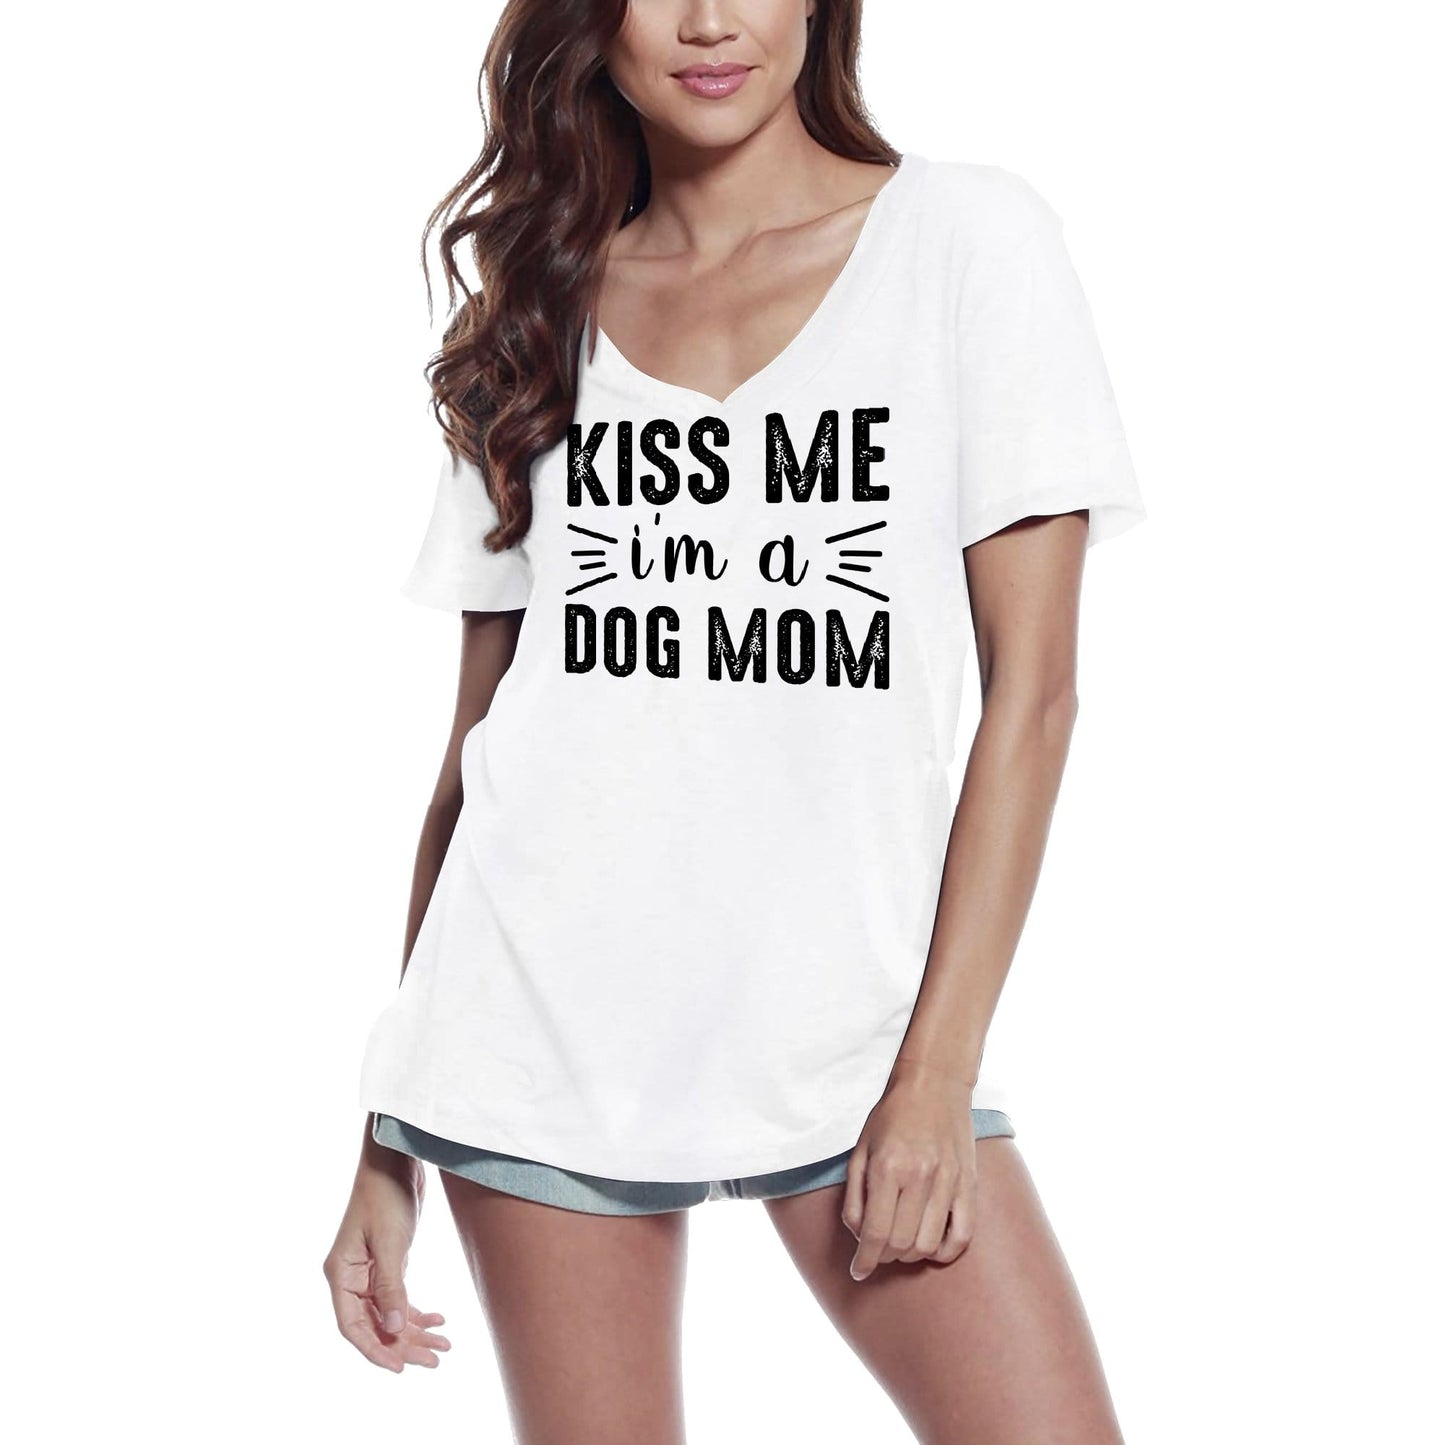 ULTRABASIC Women's T-Shirt Kiss Me I'm a Dog Mom - Short Sleeve Tee Shirt Tops